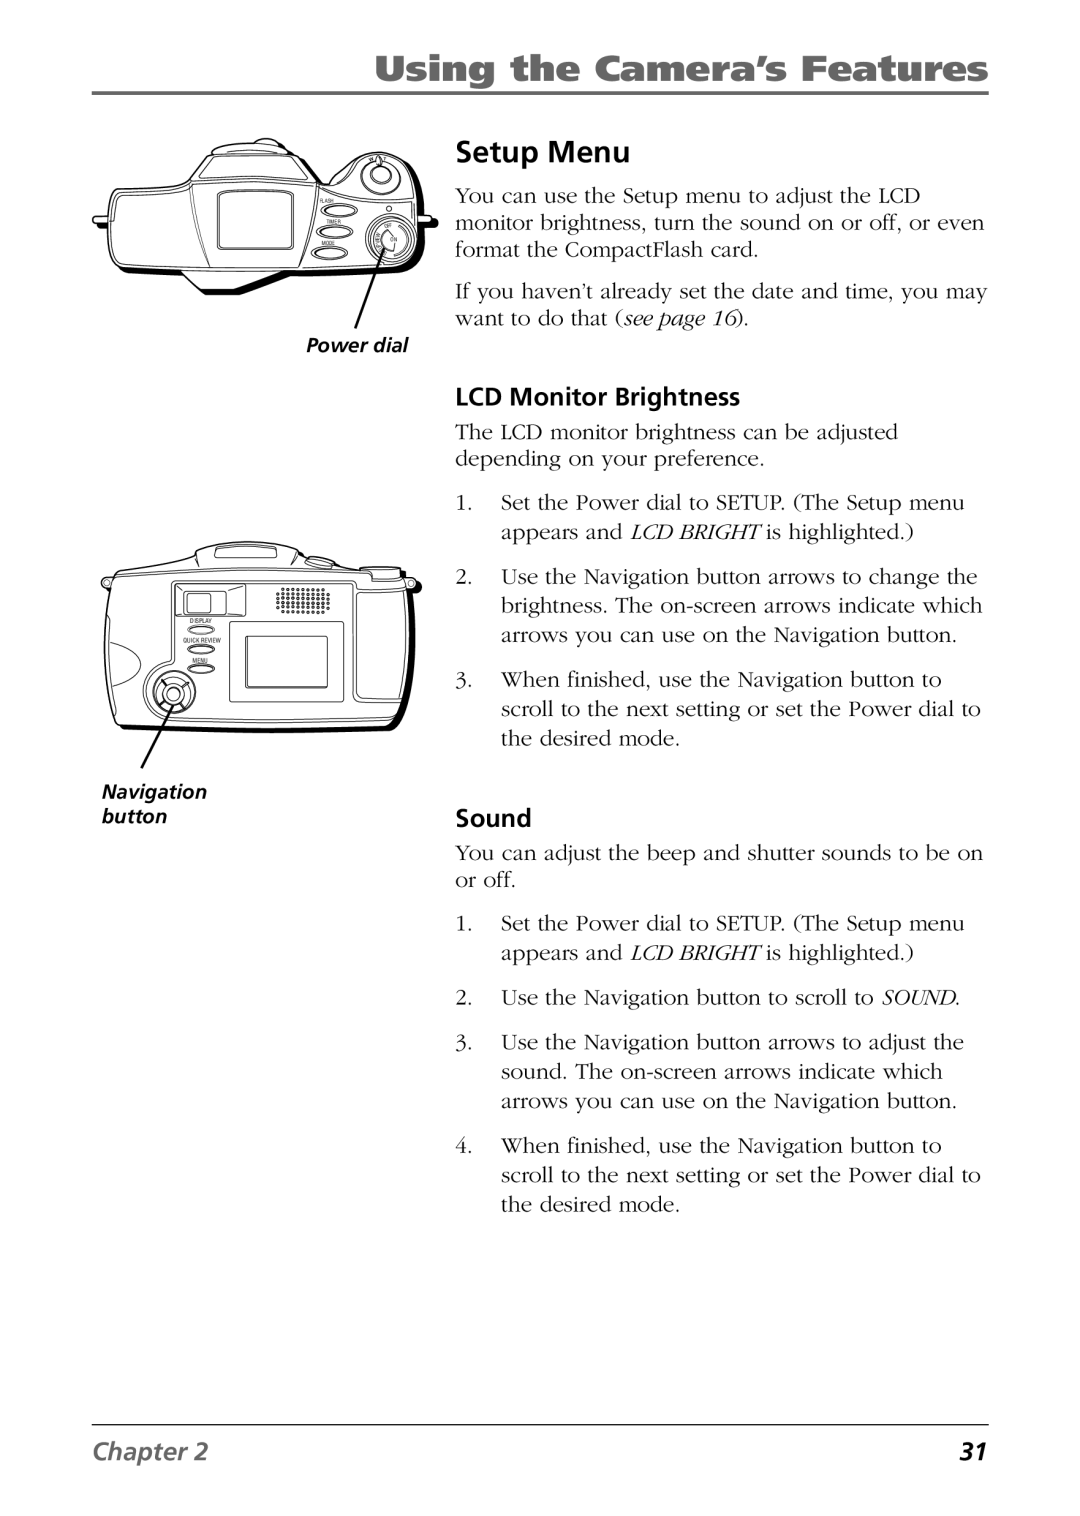 RCA CDS6300 manual Setup Menu, LCD Monitor Brightness, Sound 